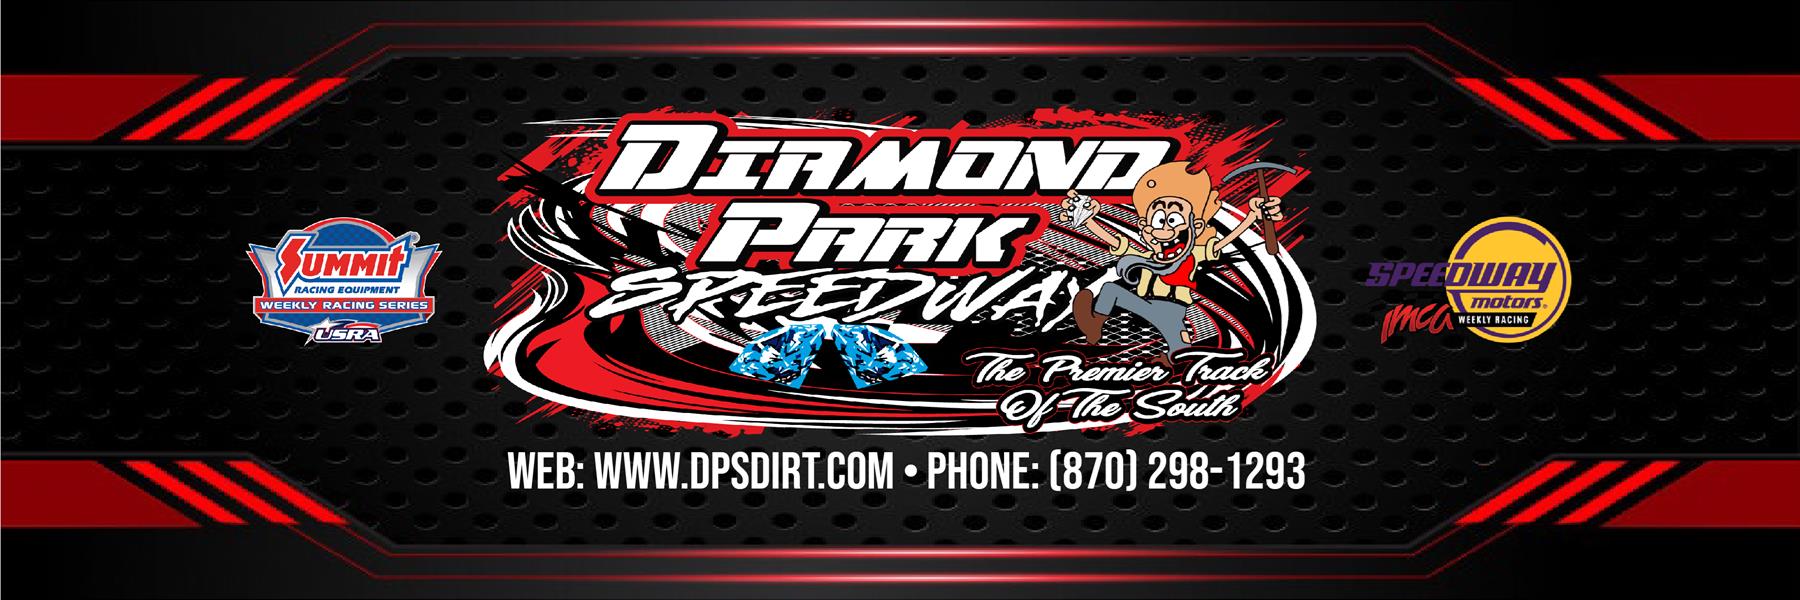 5/14/2022 - Diamond Park Speedway